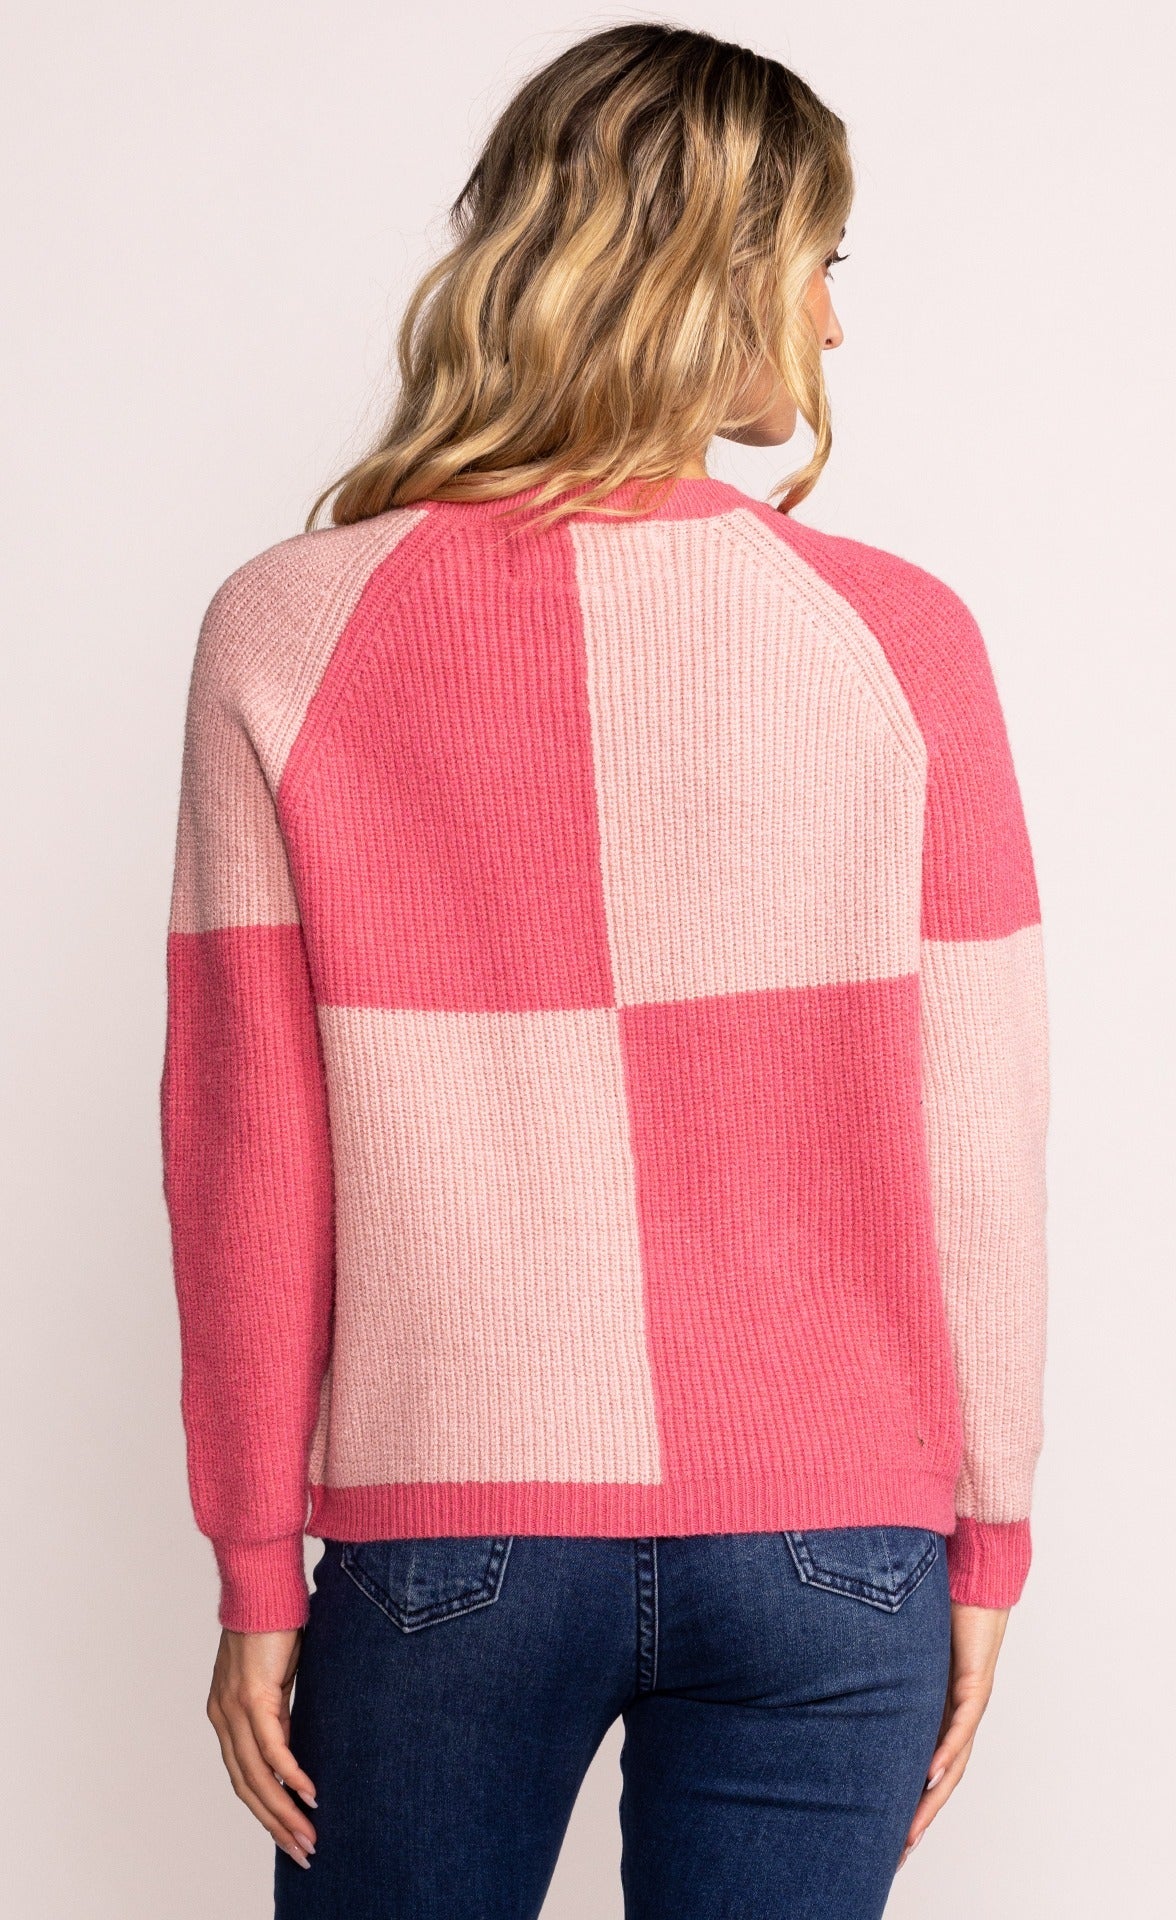 The Nova Sweater Pink